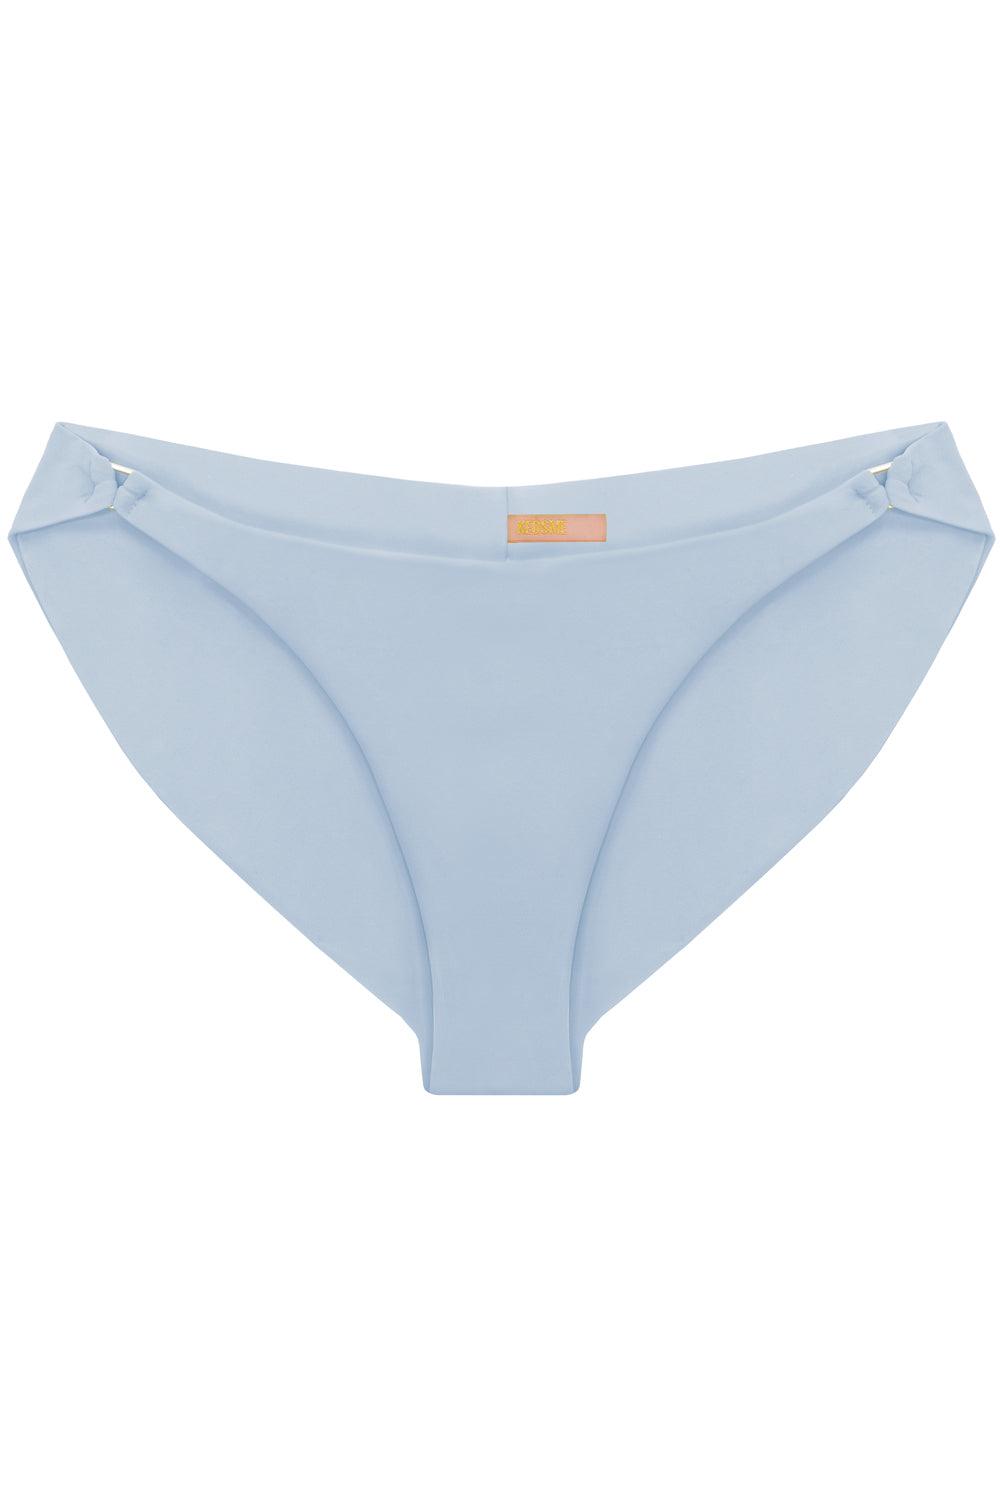 Radiya Sky bikini bottom - Bikini bottom by yesUndress. Shop on yesUndress